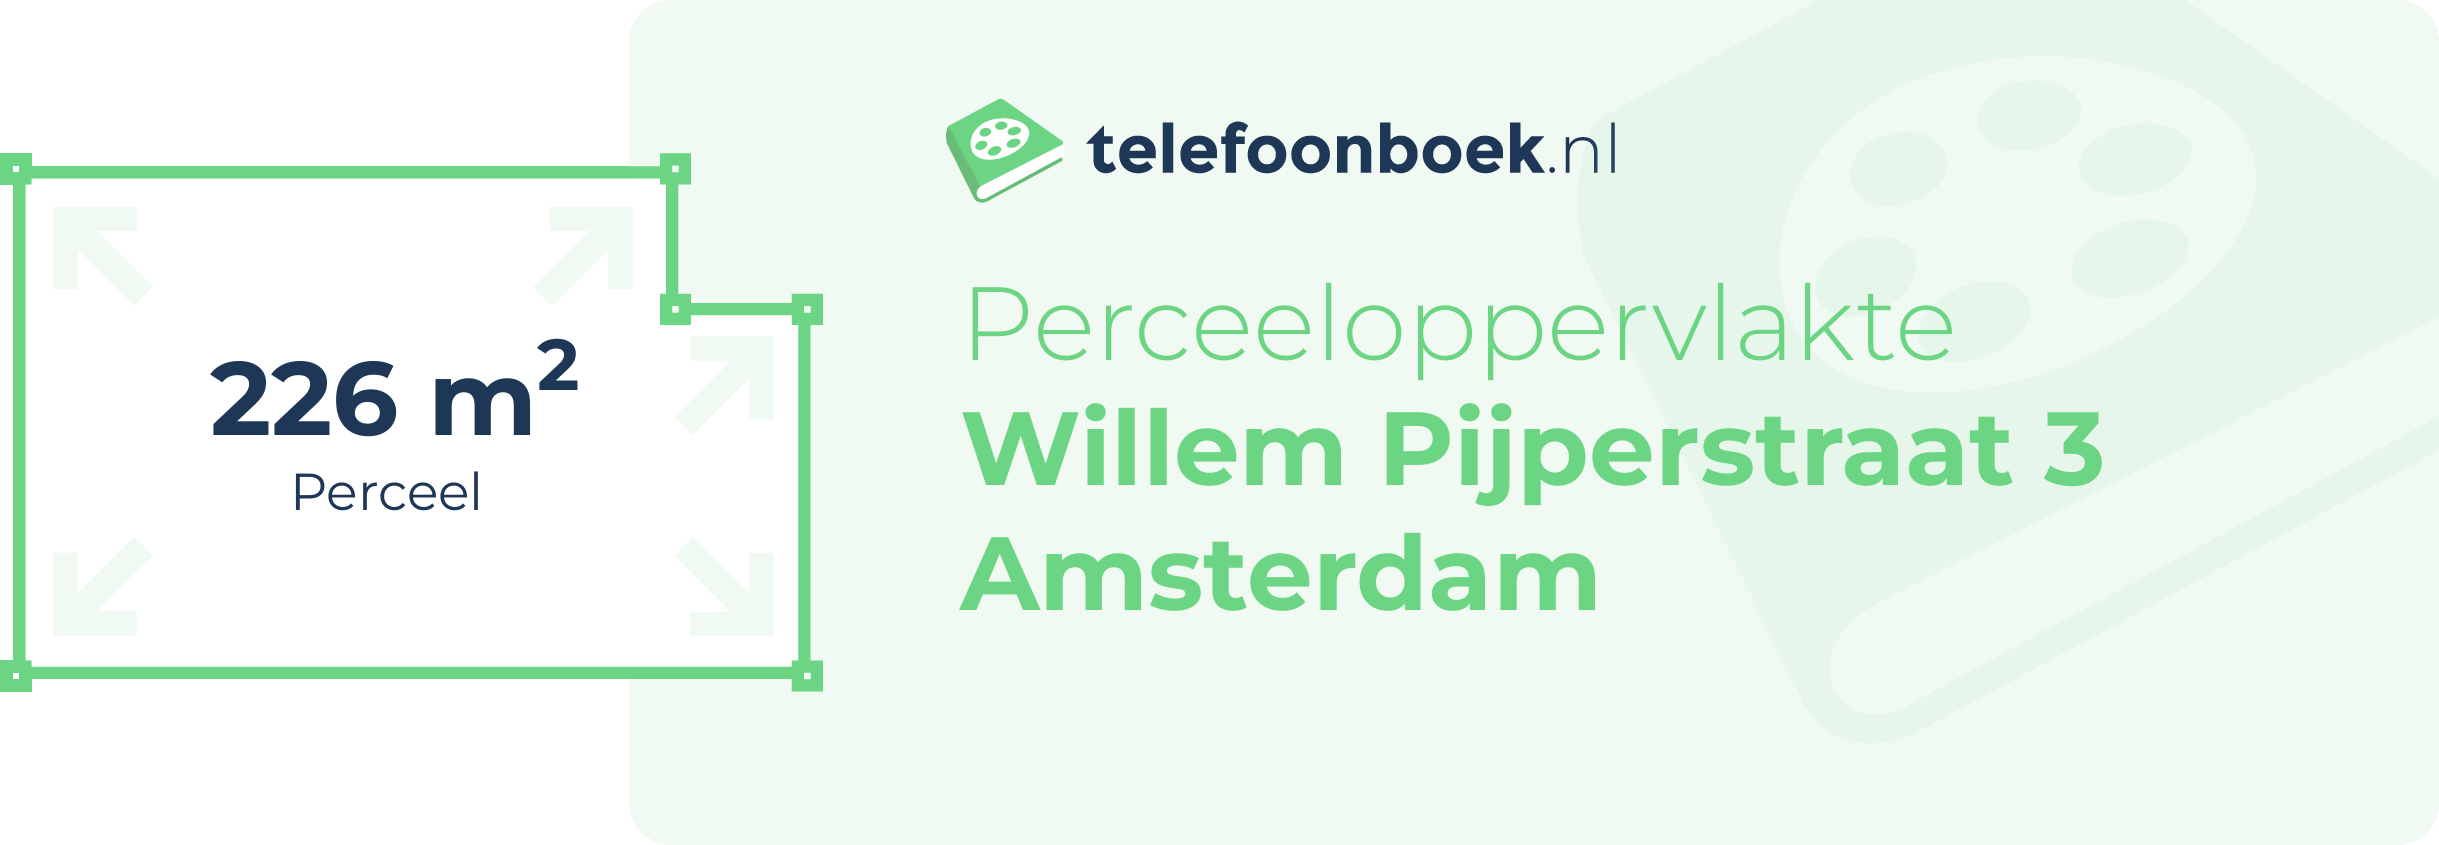 Perceeloppervlakte Willem Pijperstraat 3 Amsterdam